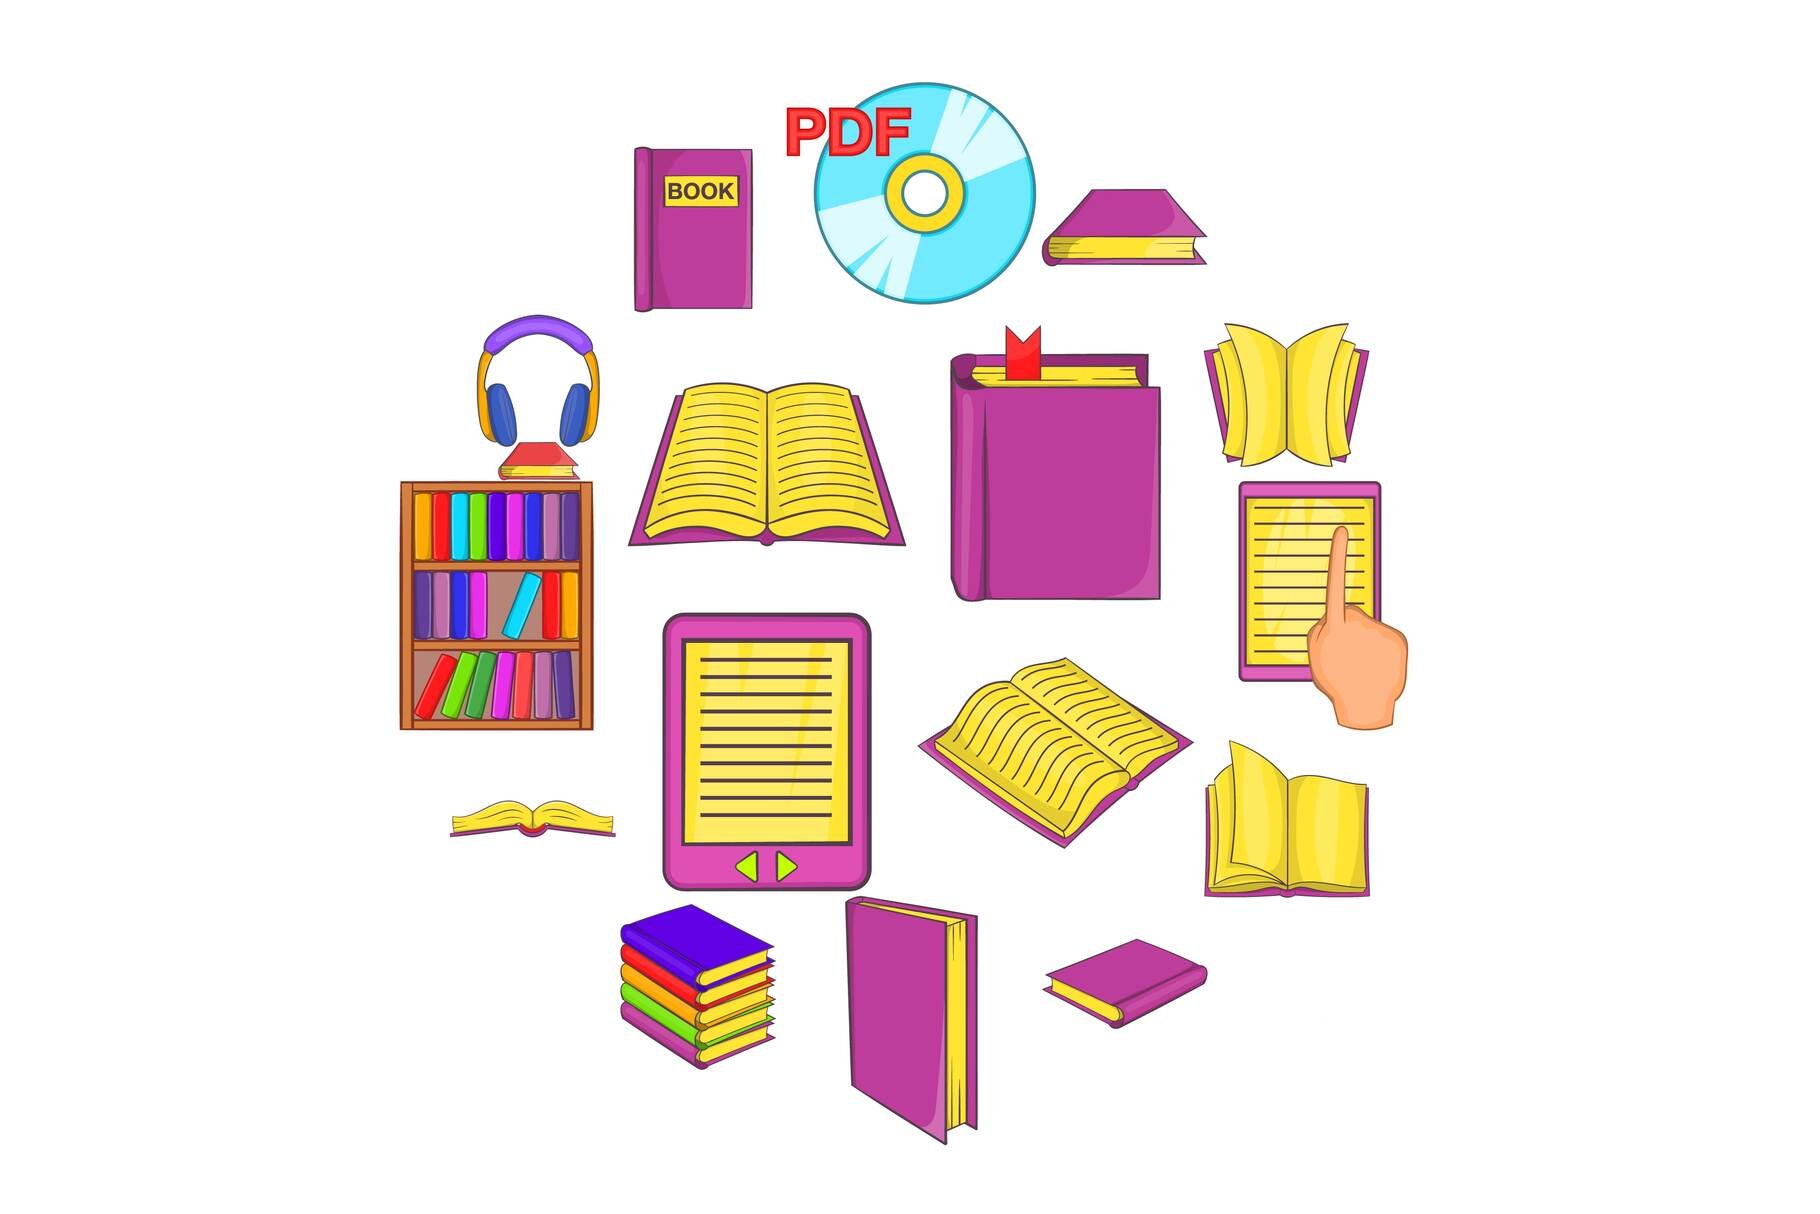 Books icons set, cartoon style cover image.